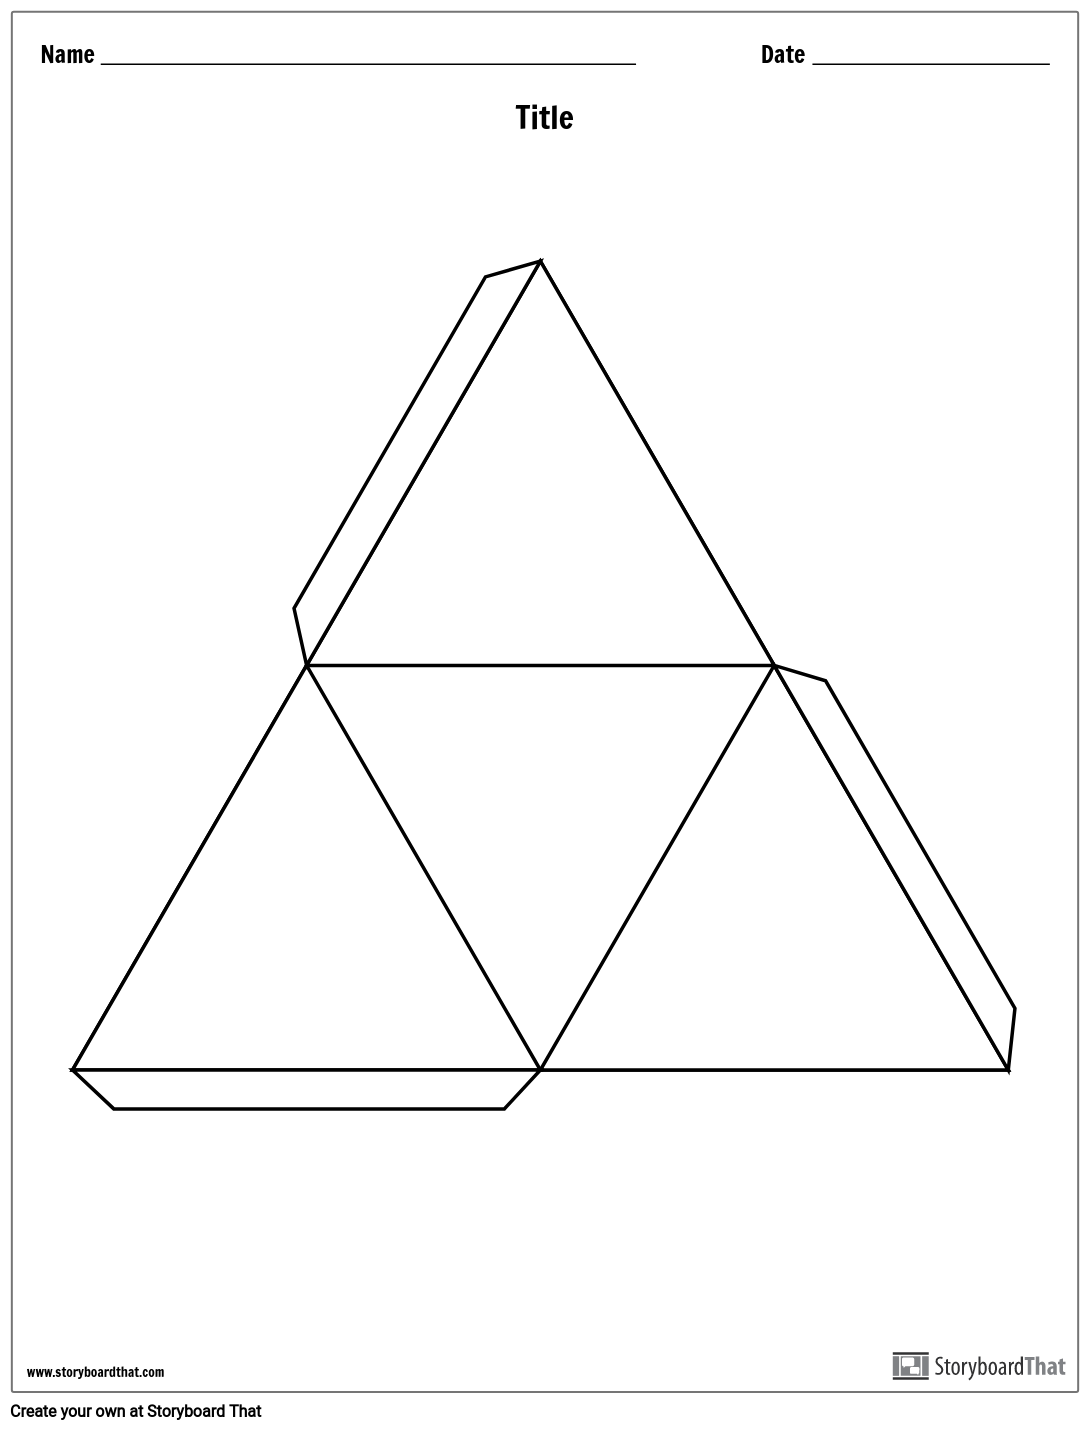 Cubo de Historia Triangular